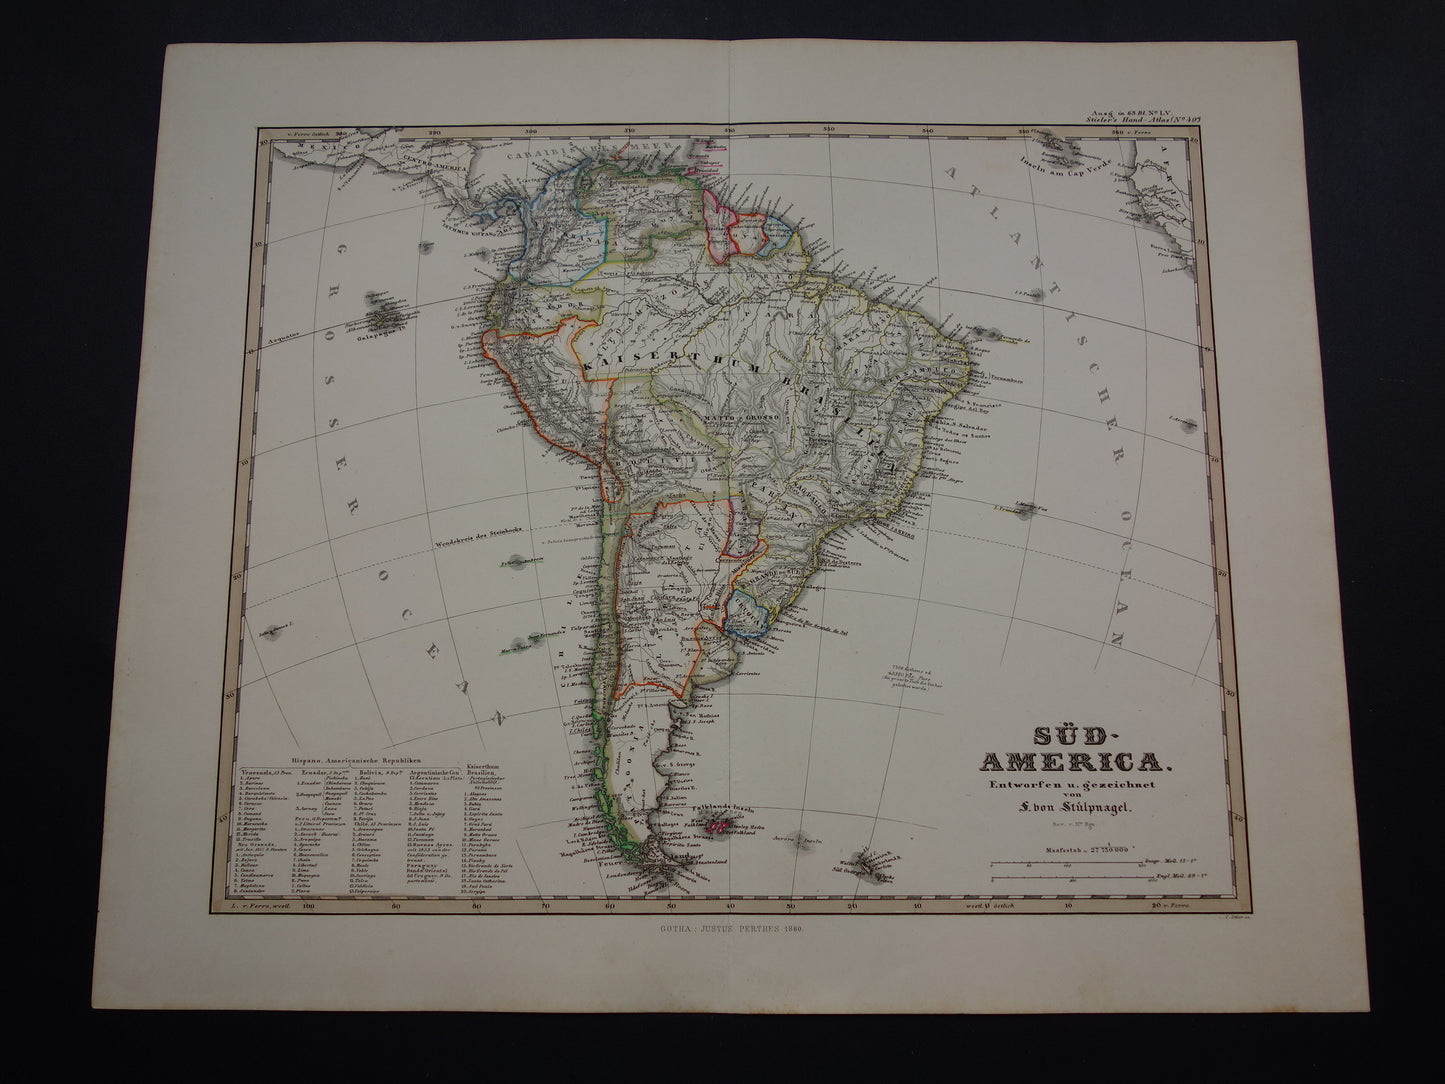 ZUID-AMERIKA Oude kaart van Zuid-Amerikaans continent in 1860 originele antieke Duitse handgekleurde landkaart poster Brazilië Patagonië Chili met jaartal